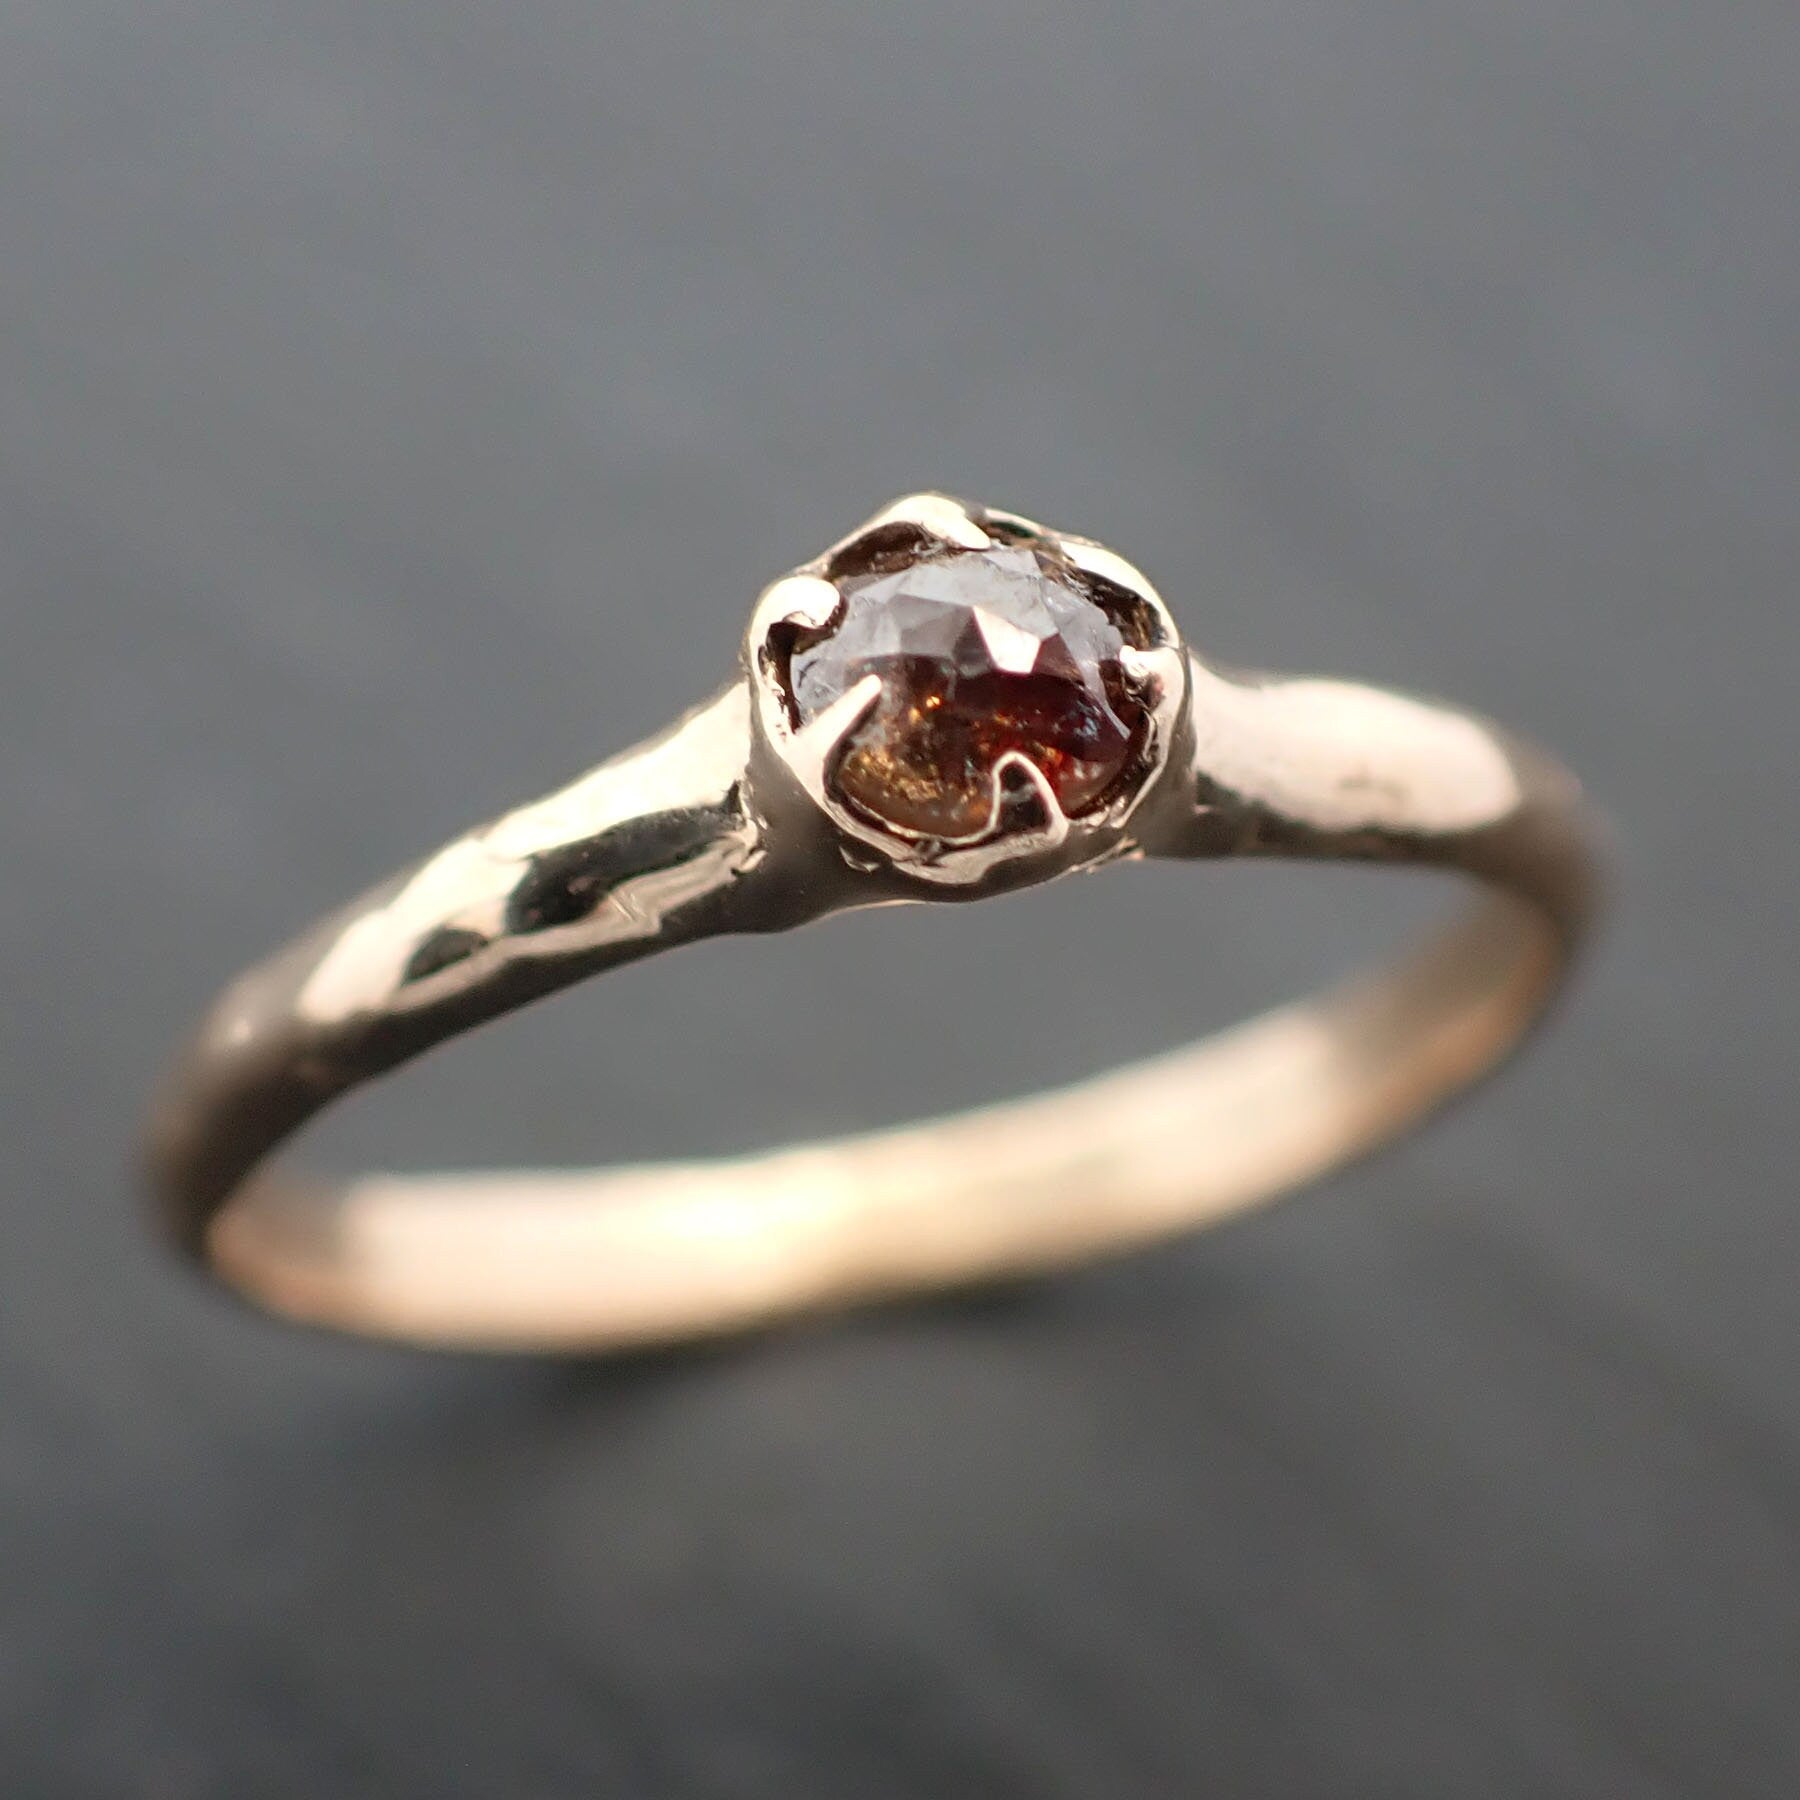 Fancy cut orange Diamond Solitaire Engagement 14k yellow Gold Wedding Ring byAngeline 3502